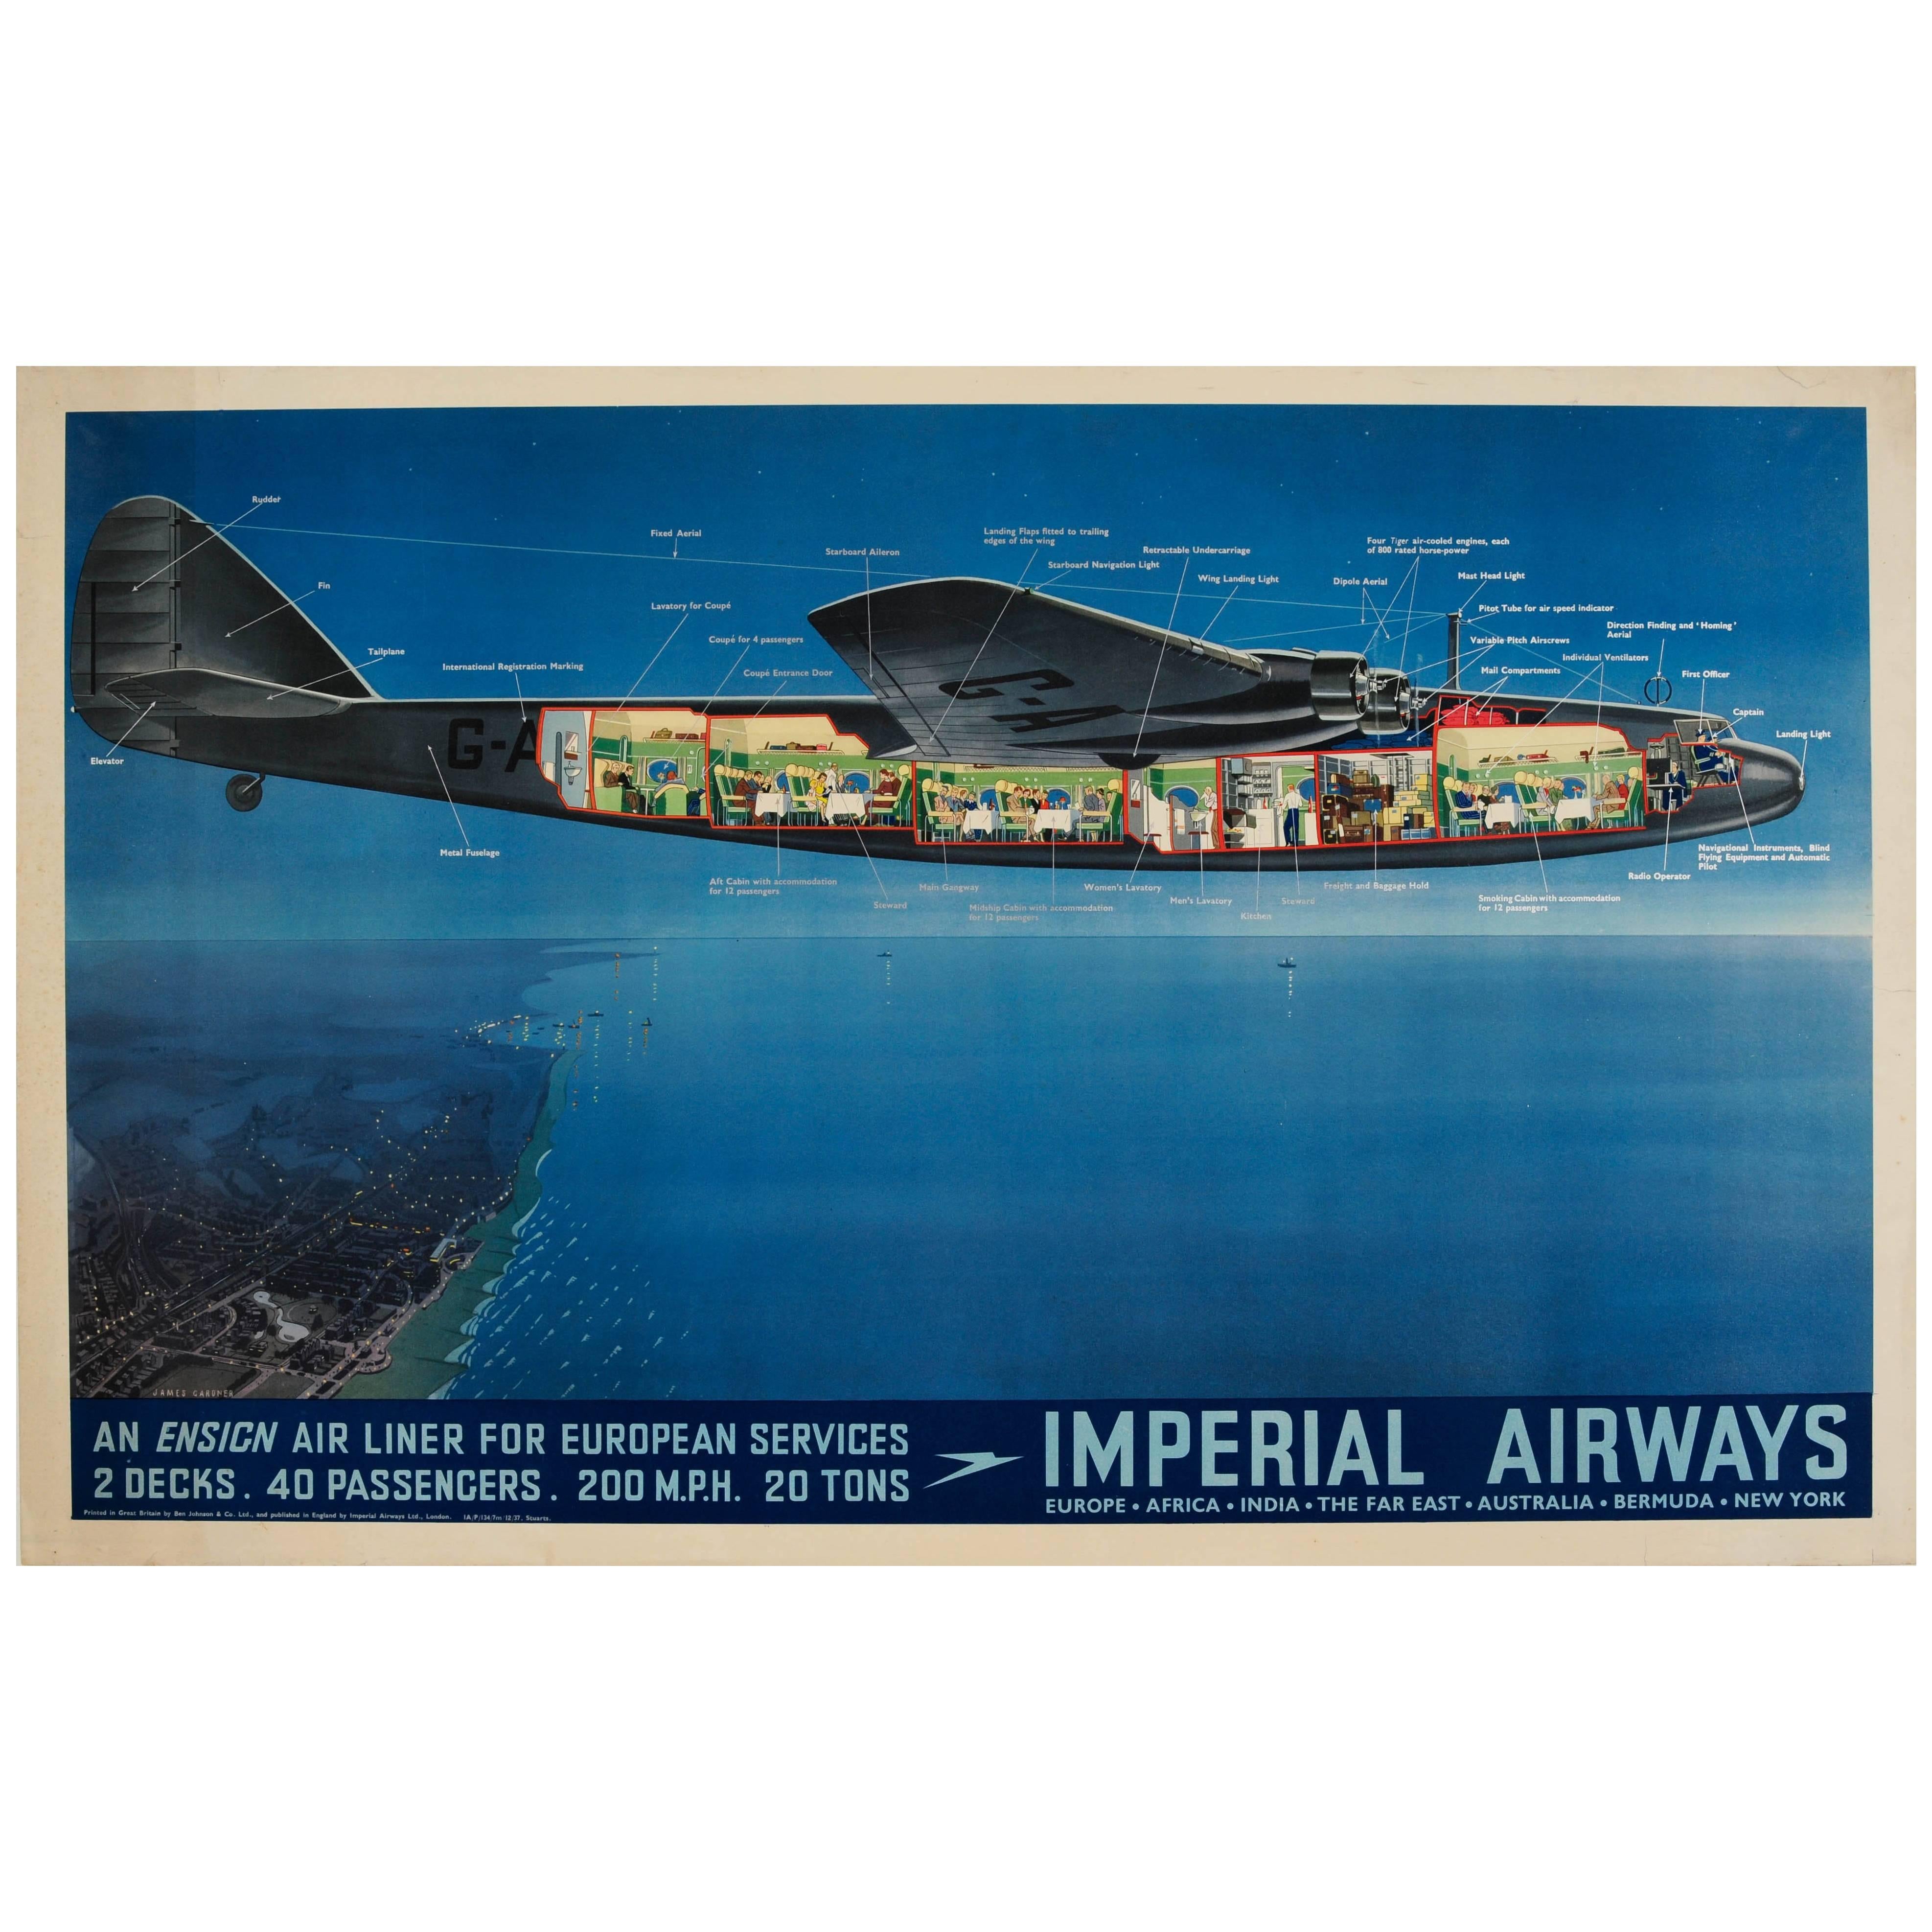 Original Vintage Imperial Airways Ensign Air Liner Travel Poster Europe Services